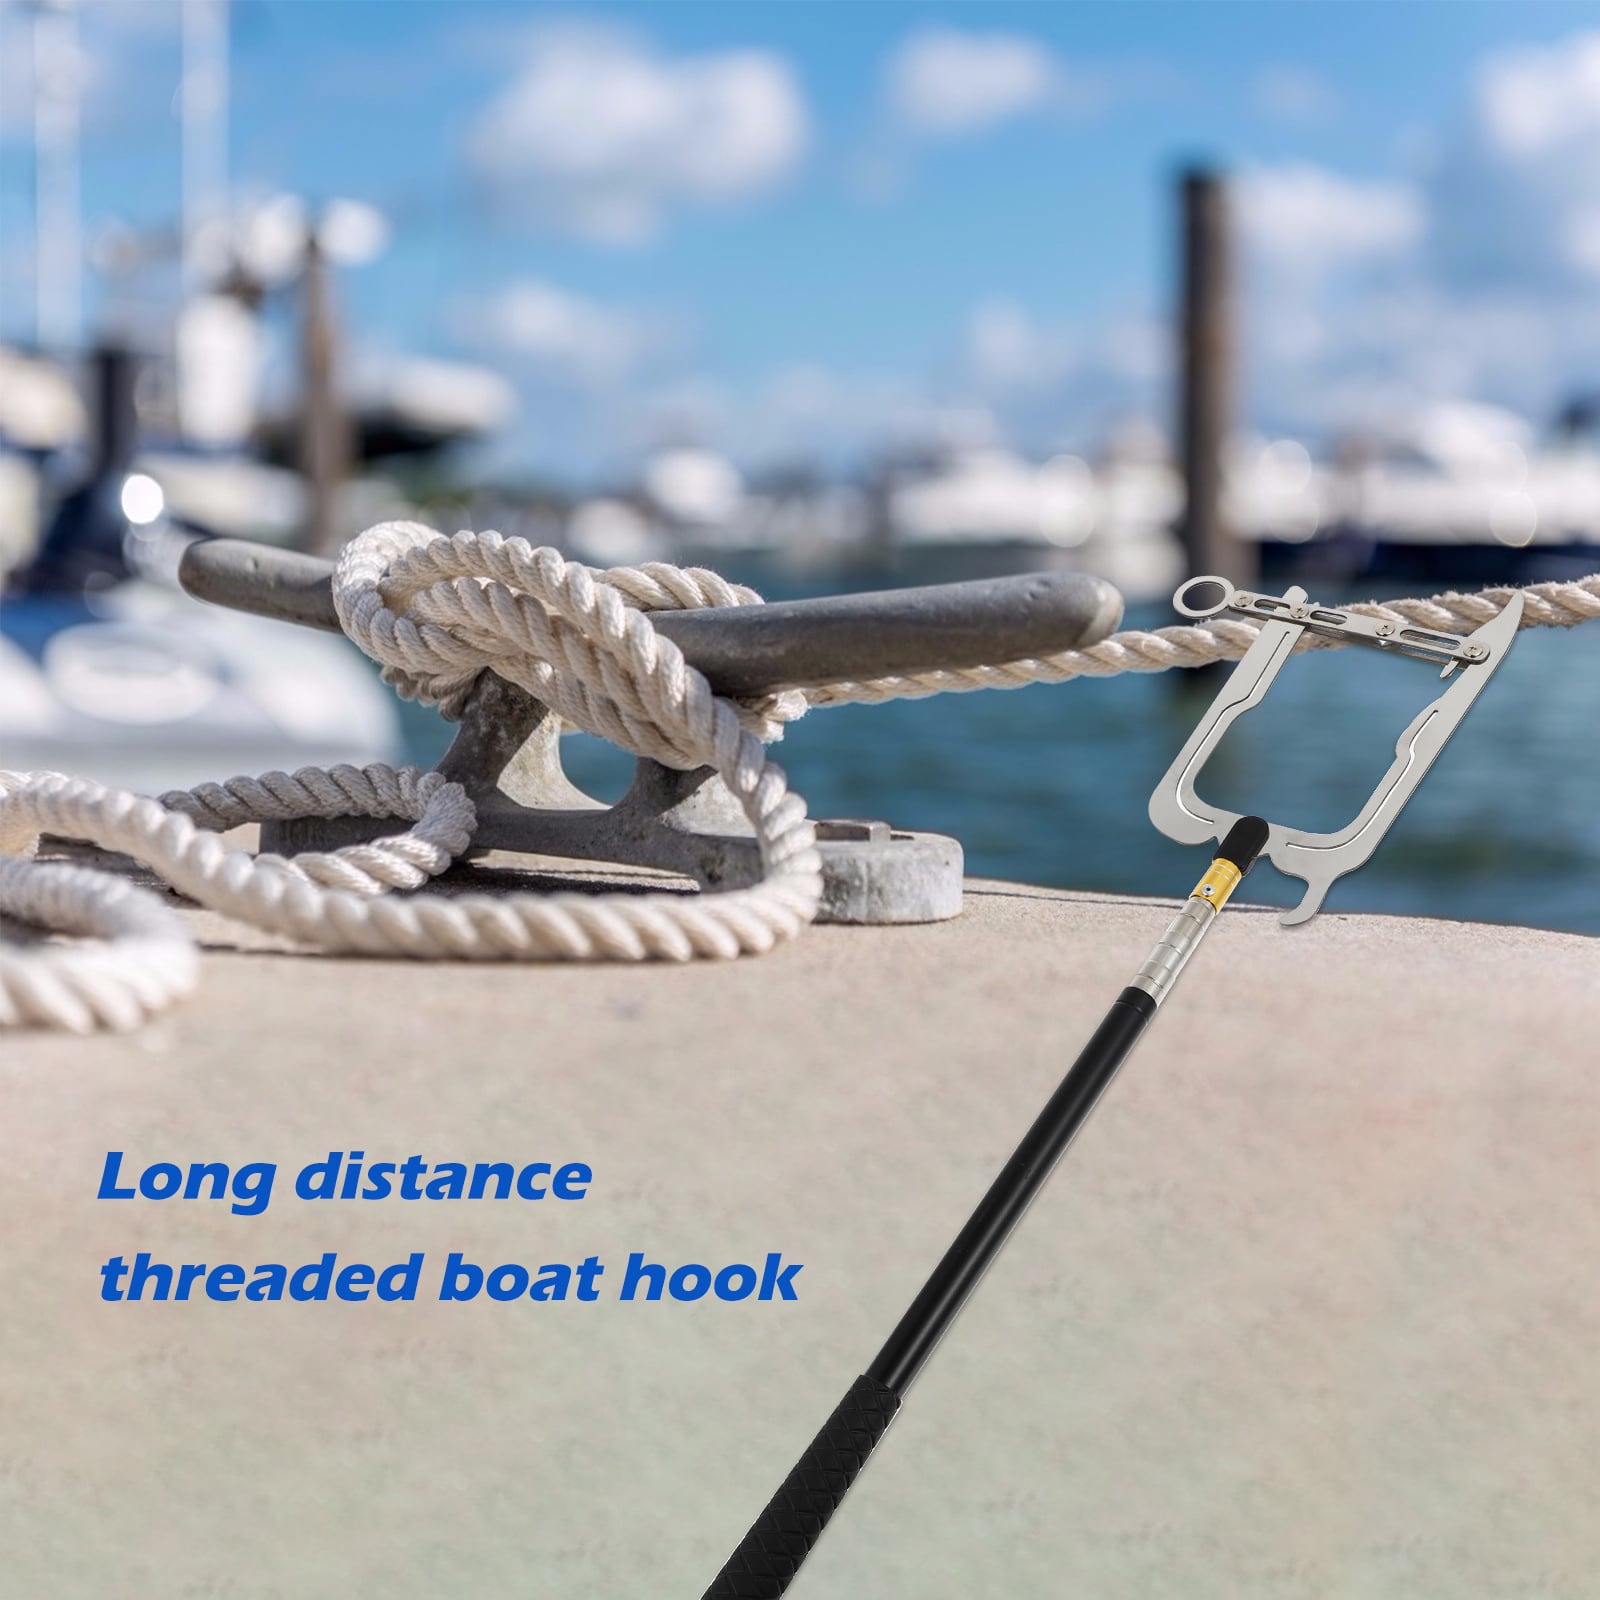 Lazy line boat hook - Docking - Landolt Systems - mooring rope